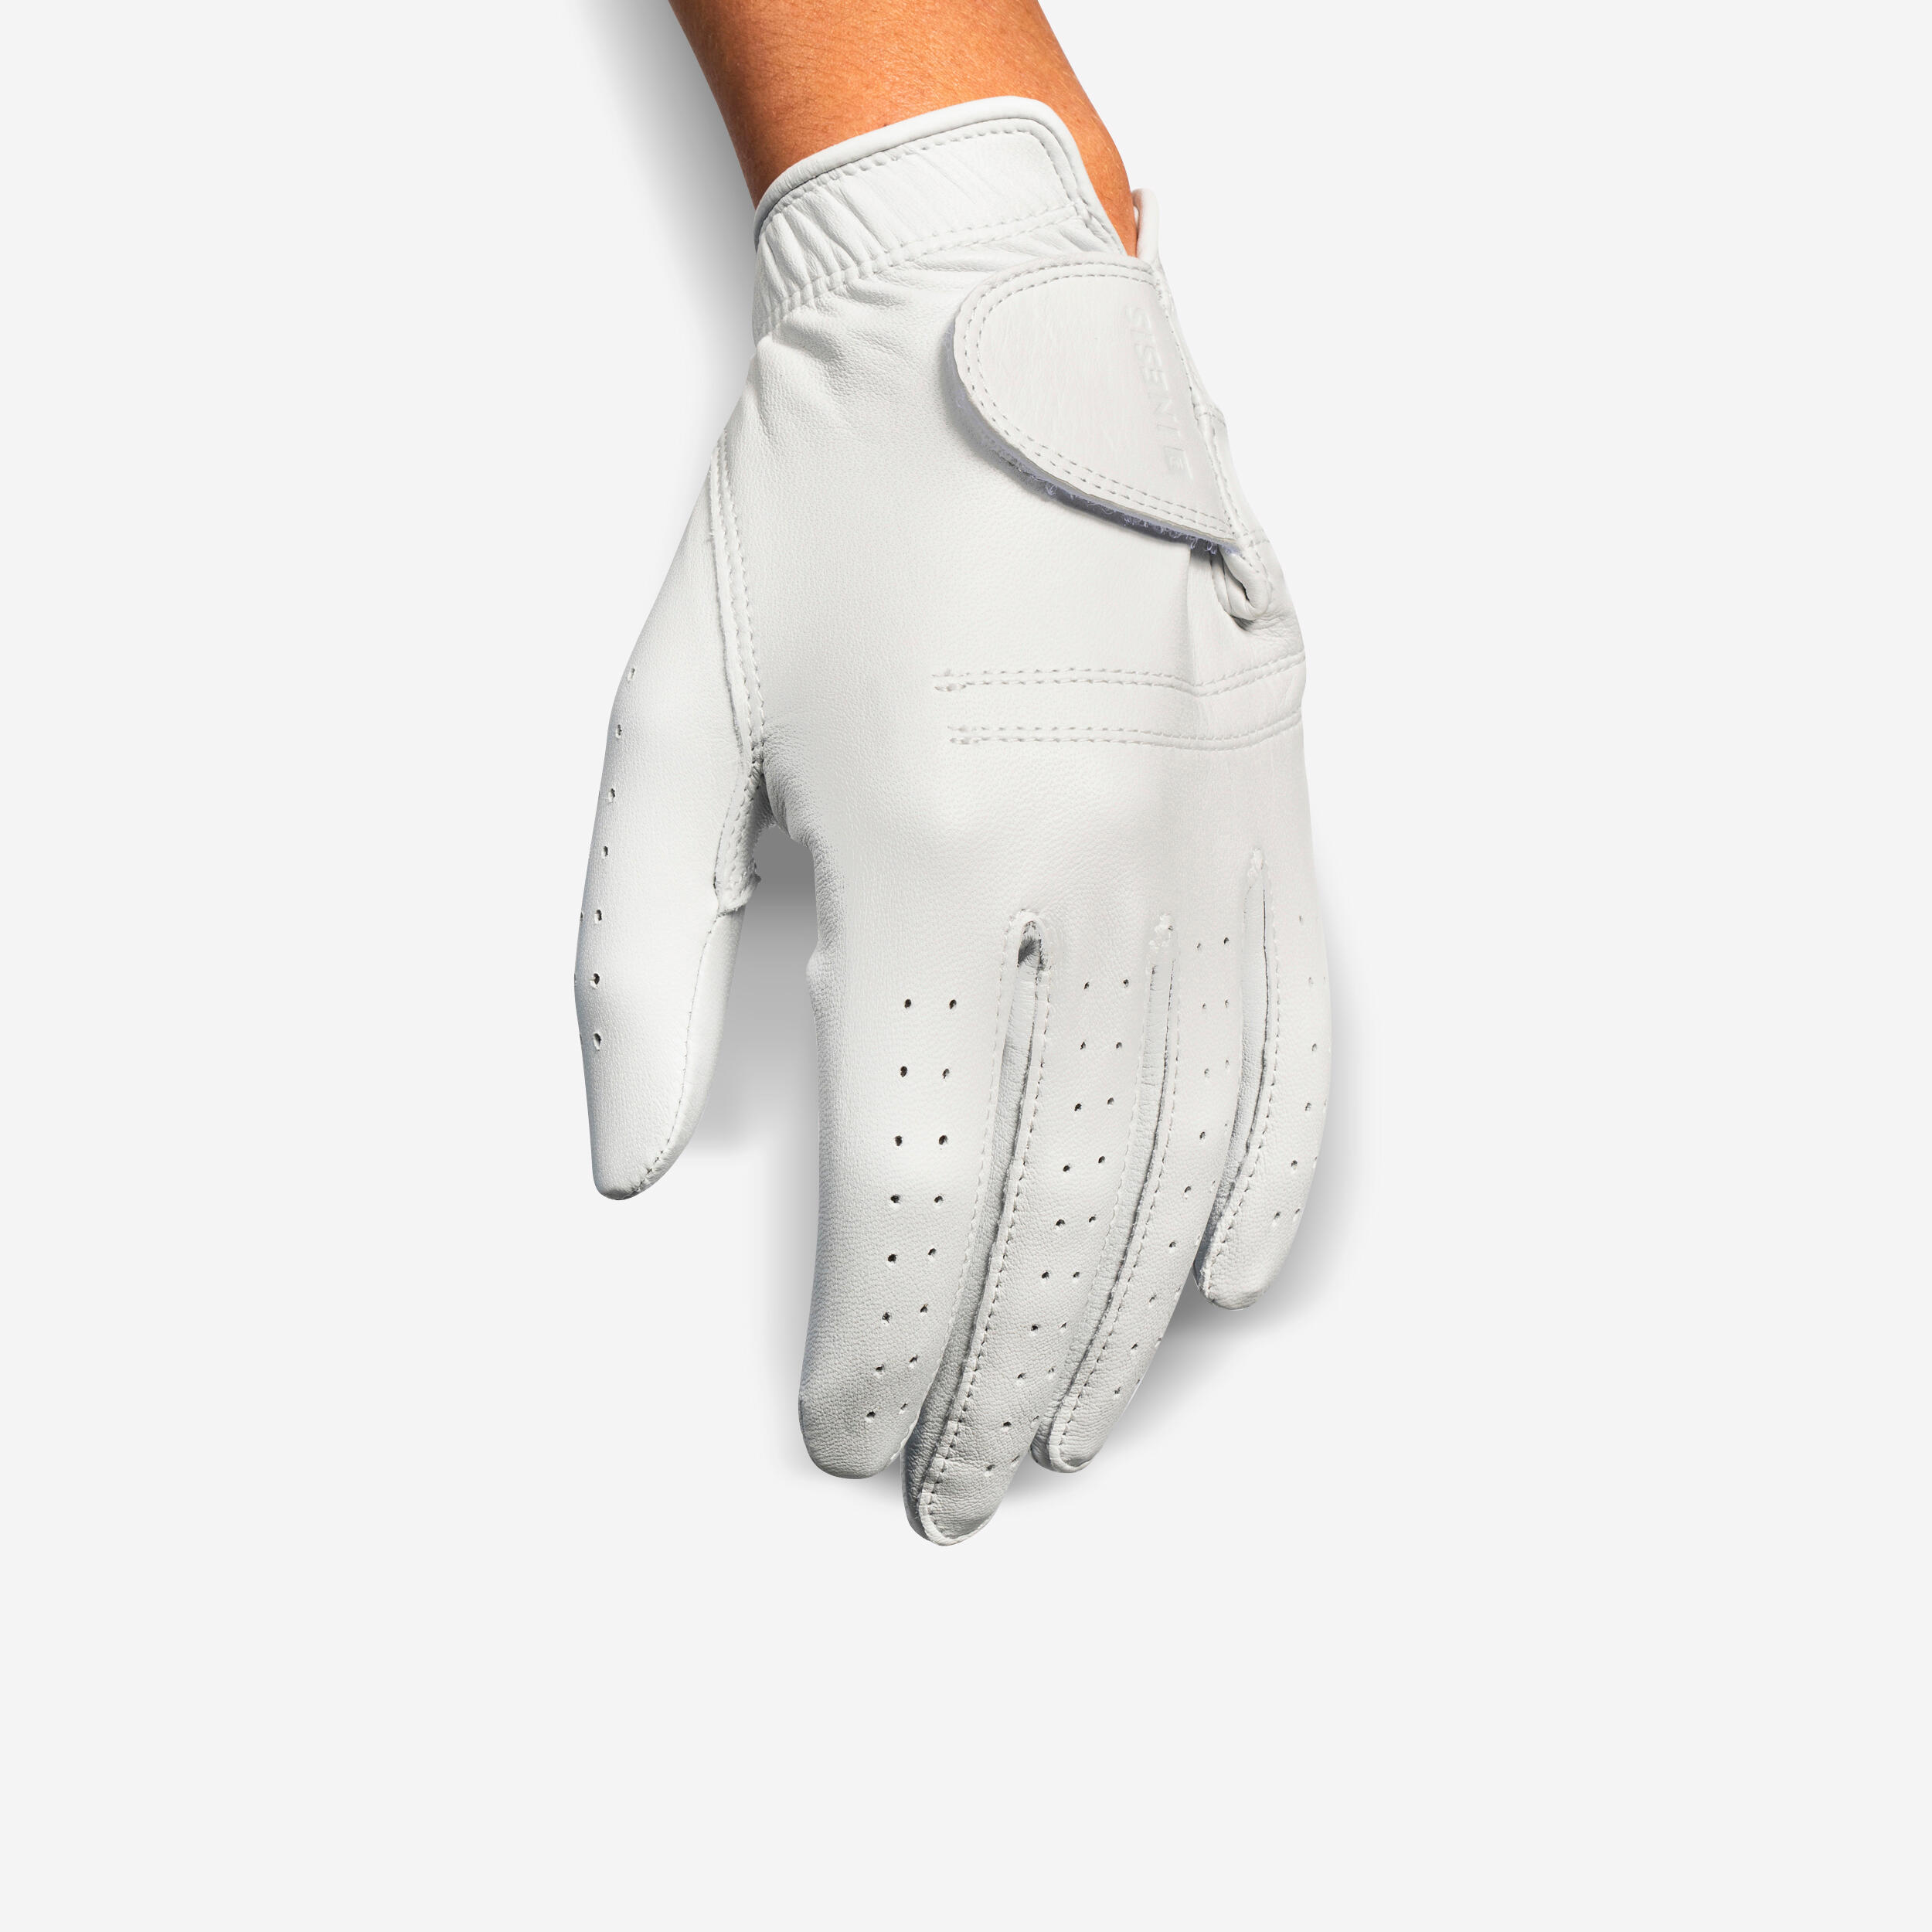 INESIS Women's golf right-handed Tour glove white